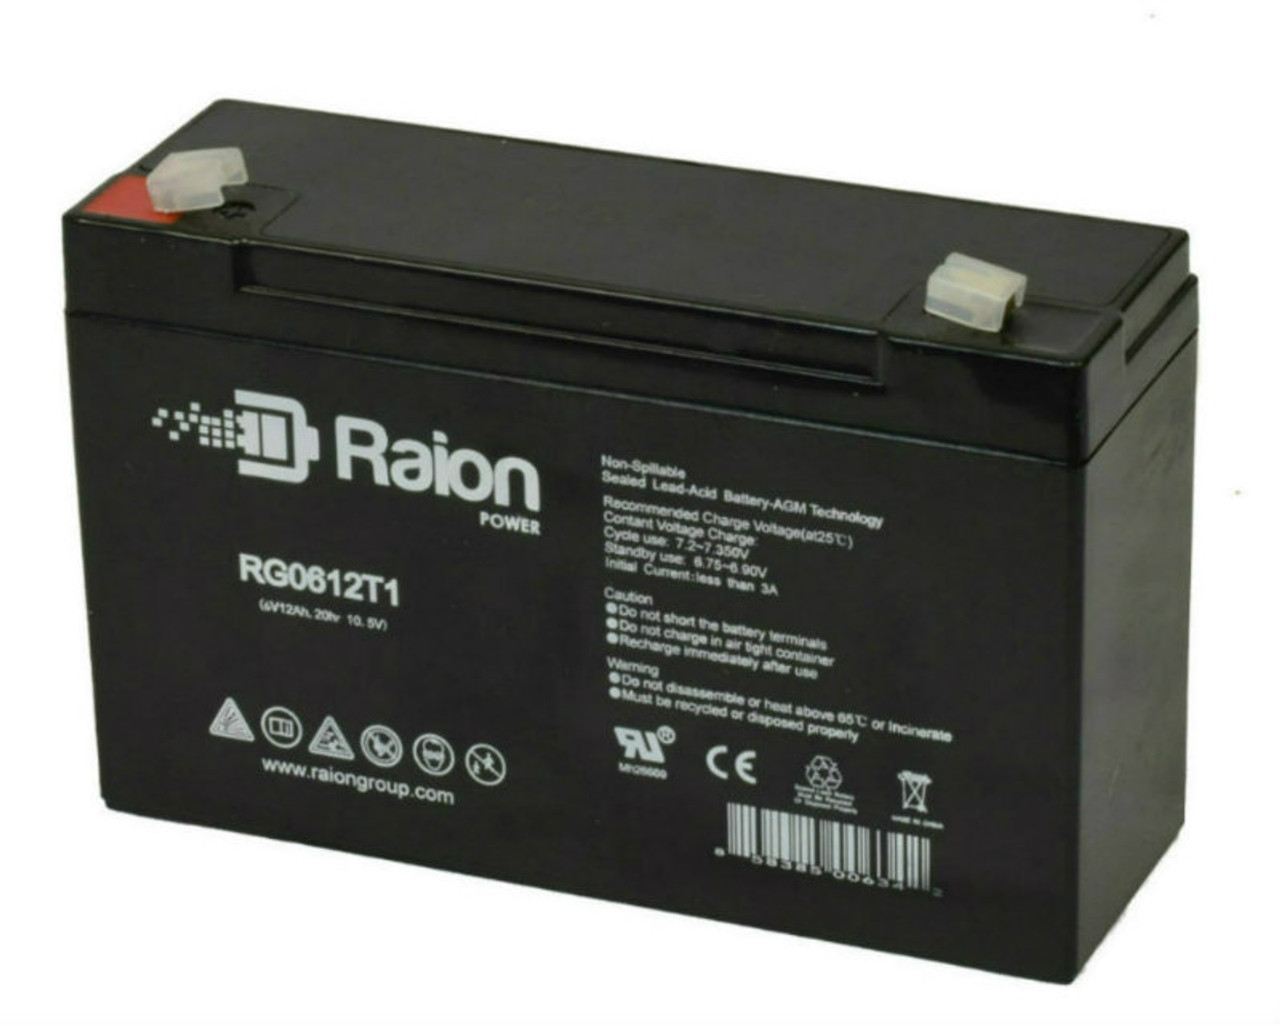 Raion Power RG06120T1 6V 12Ah Replacement UPS Battery Cartridge for Tripp Lite BC Pro 675VA BCPRO675 Version 2